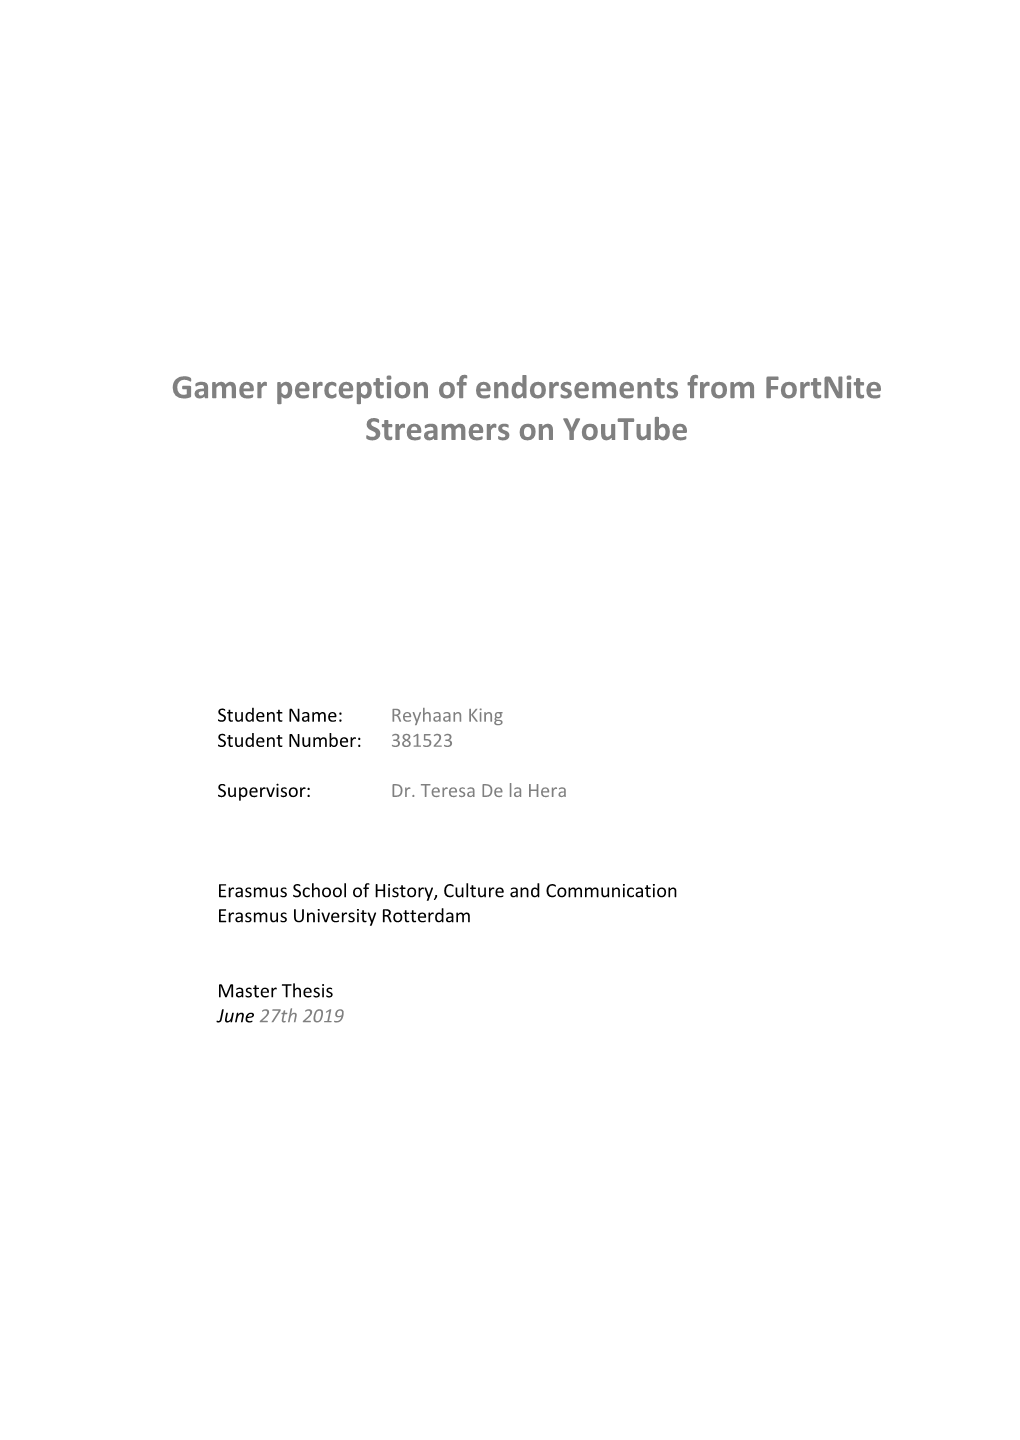 Gamer Perception of Endorsements from Fortnite Streamers on Youtube